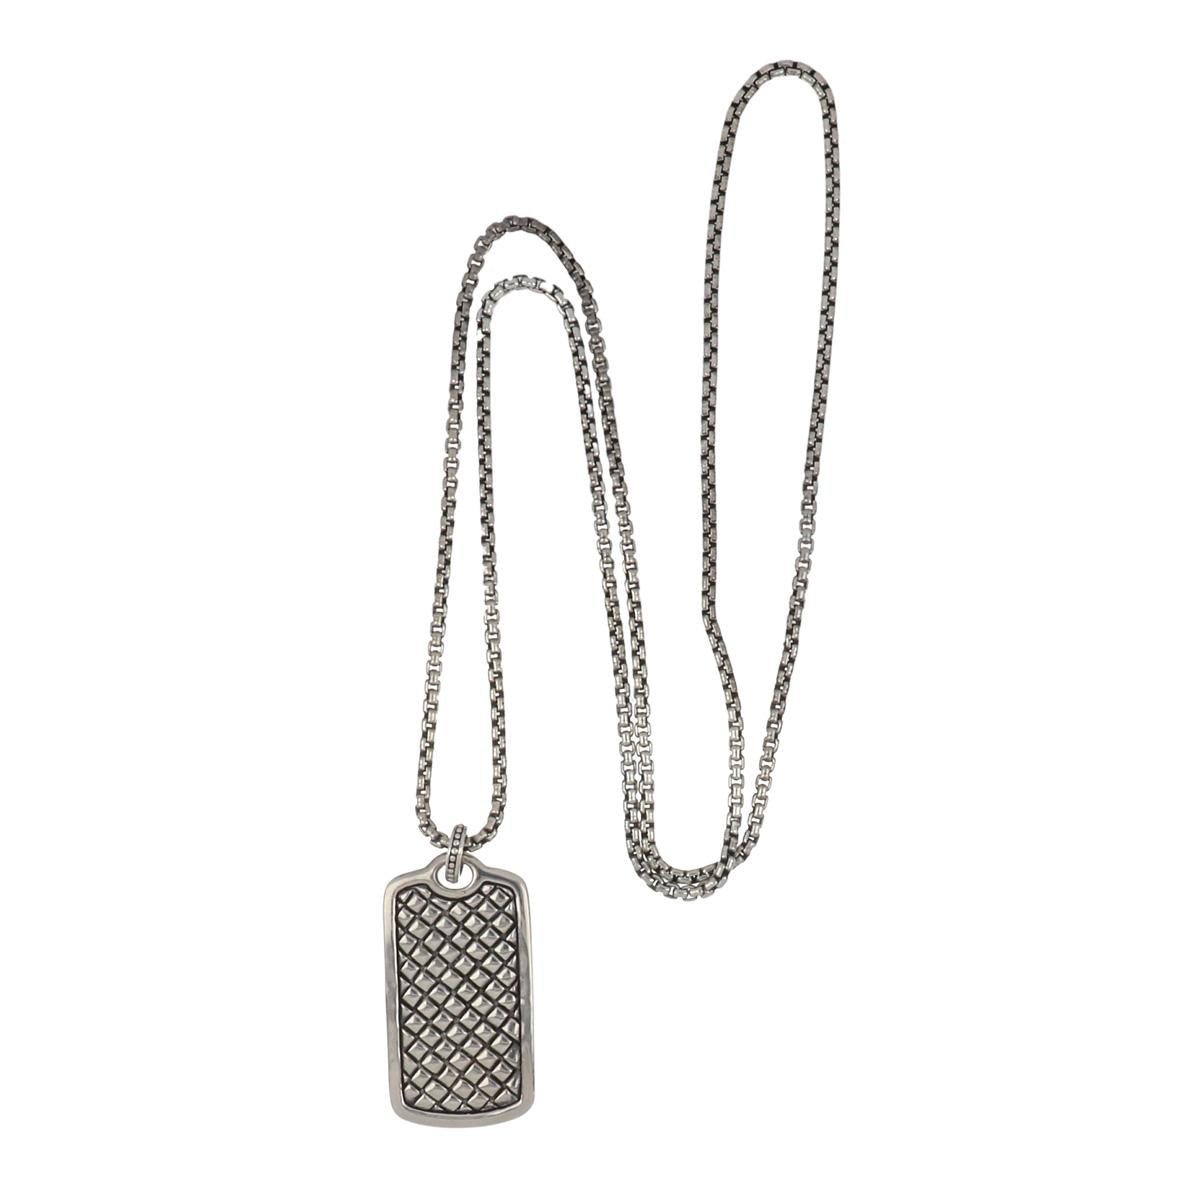 Diesel's dog tag necklace stainless steel | Diesel DX1455